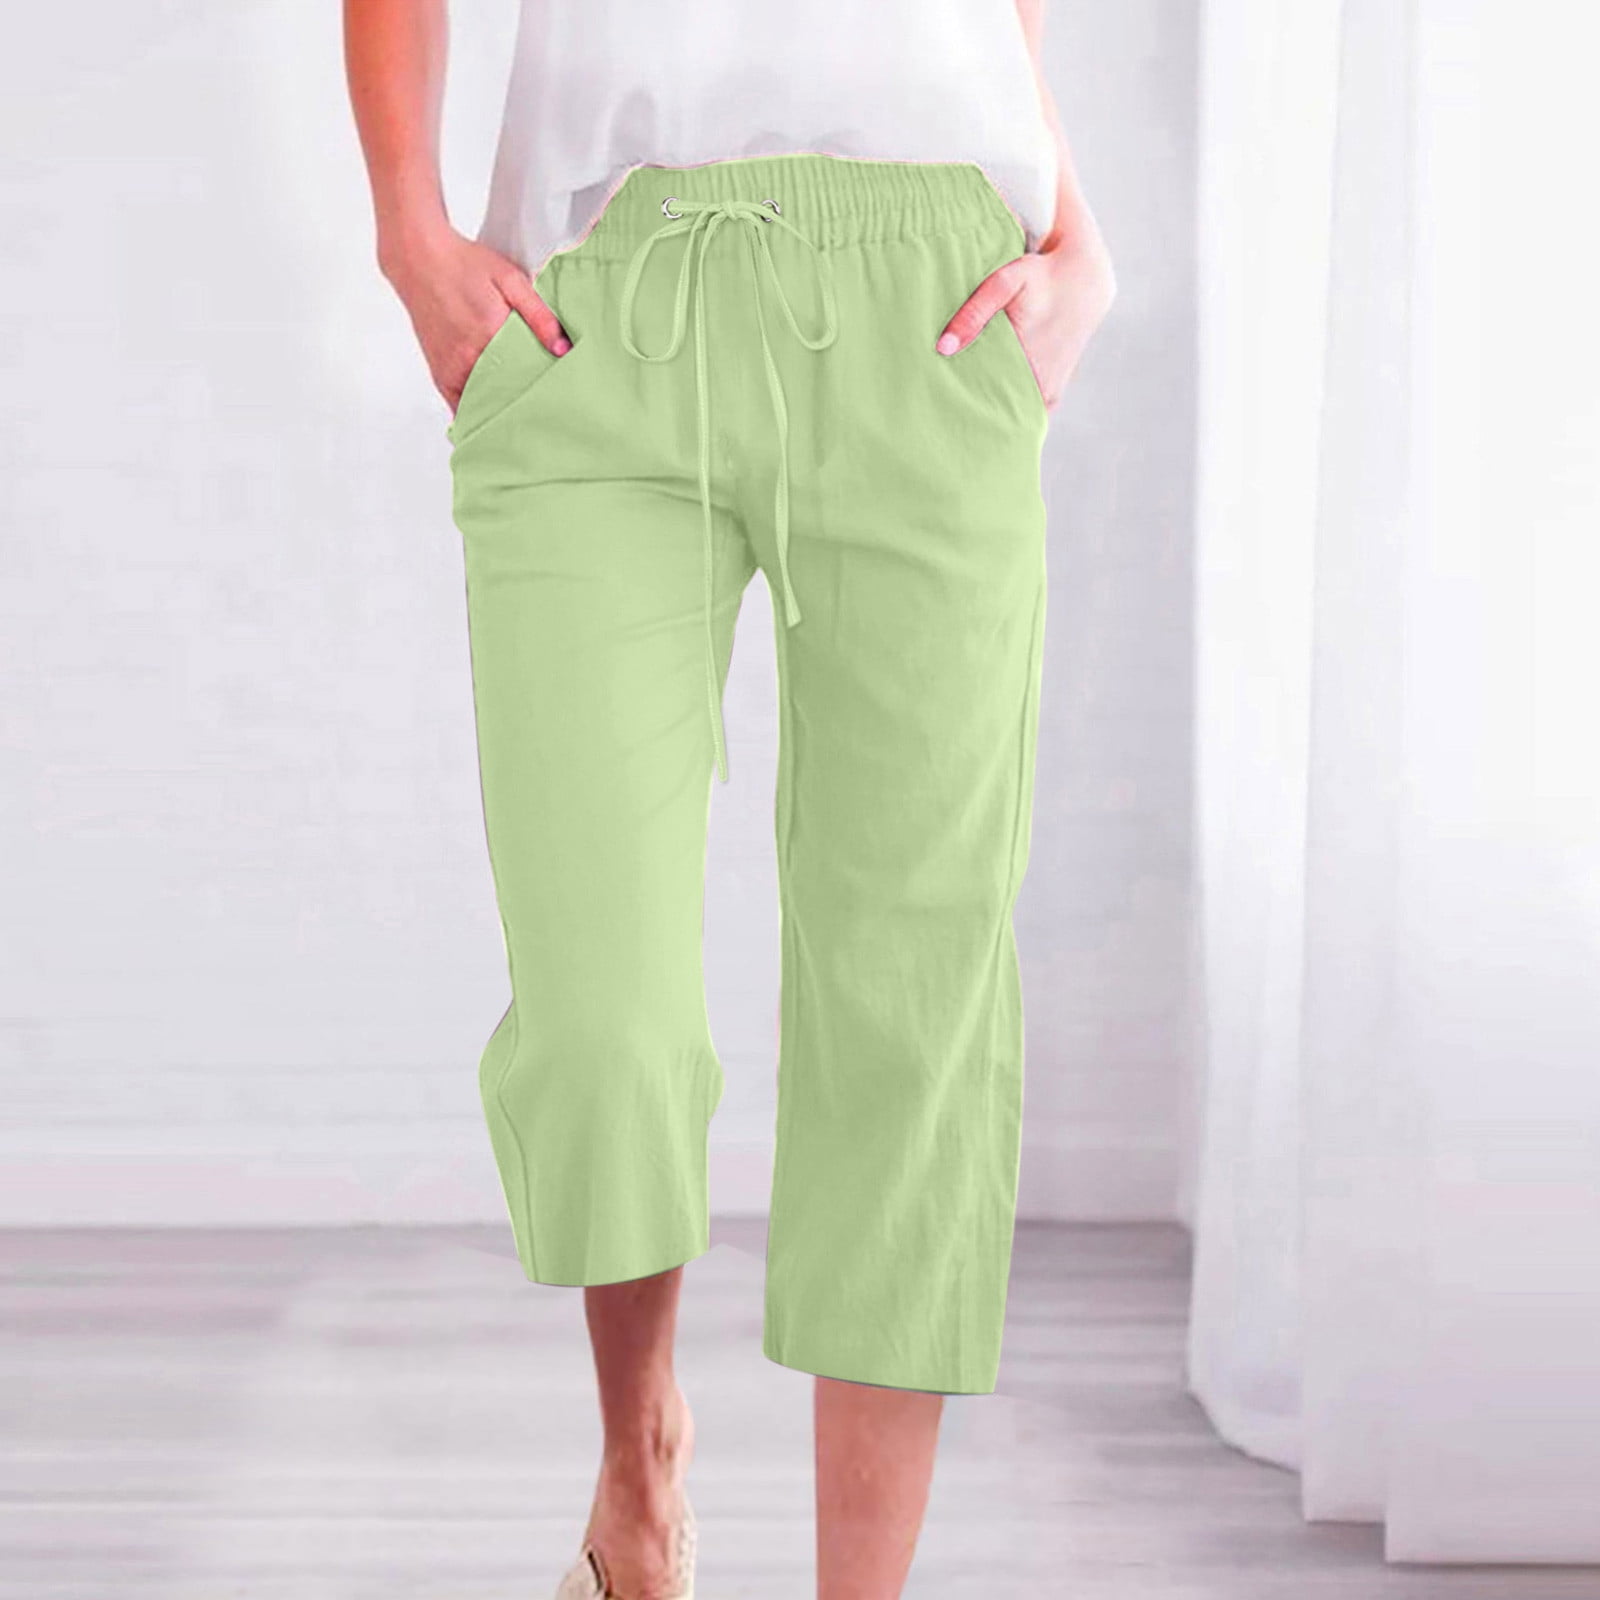 Plus Size Capris For Women - Cotton Capri Pants - Black - Tanya Enterprises  at Rs 695.00, Ludhiana